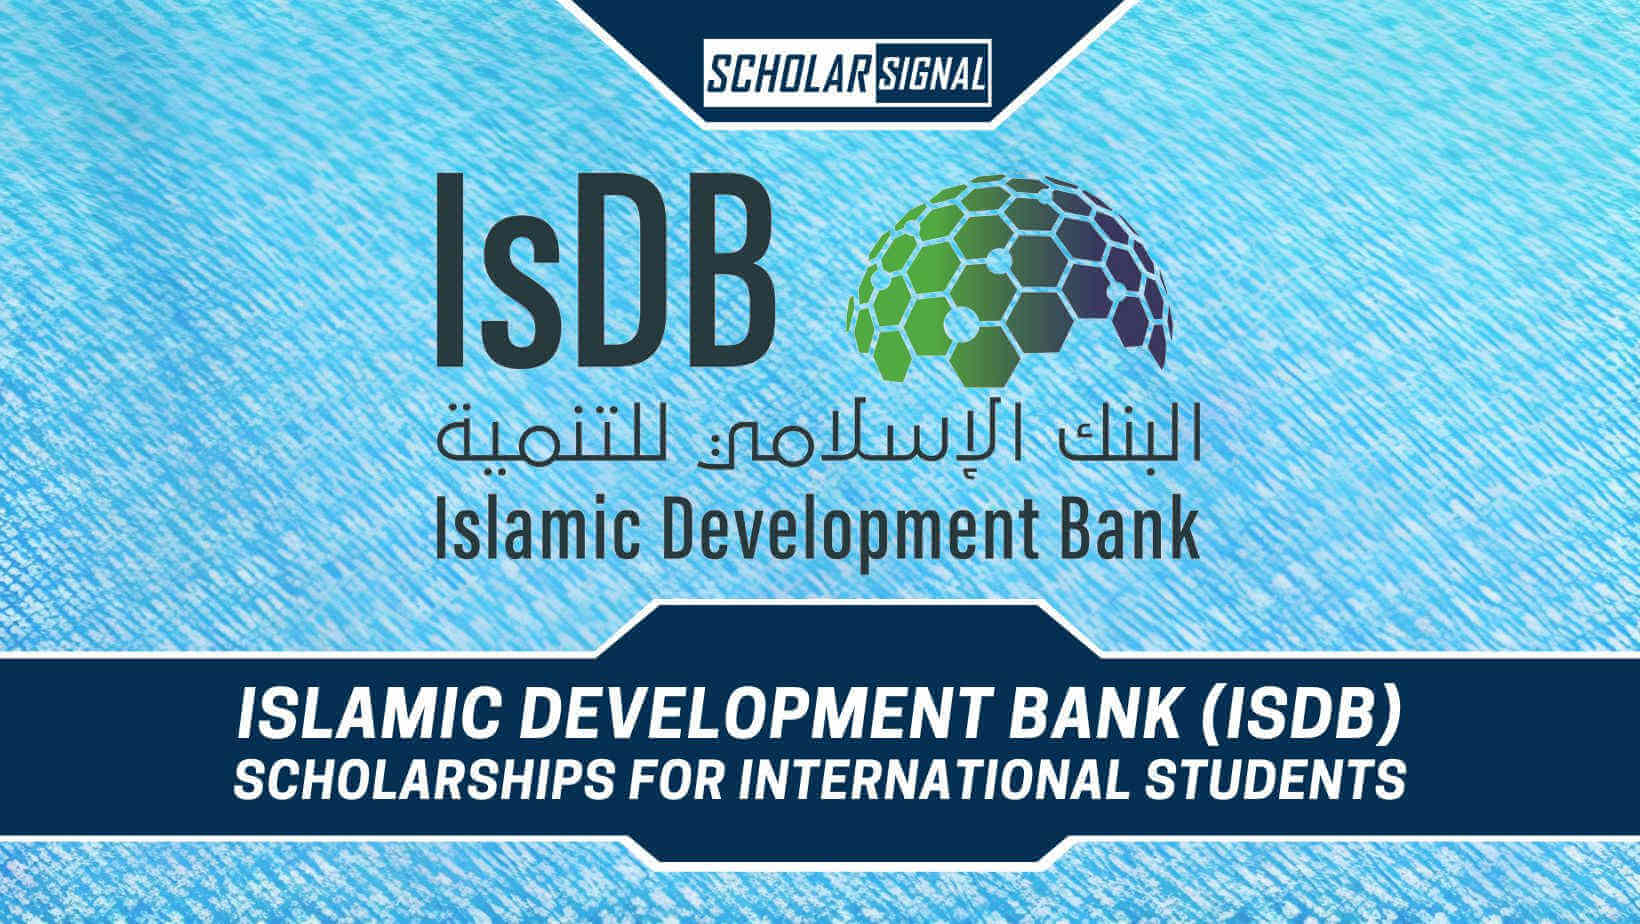 Islamic Development Bank (IsDB) Scholarships for International Students